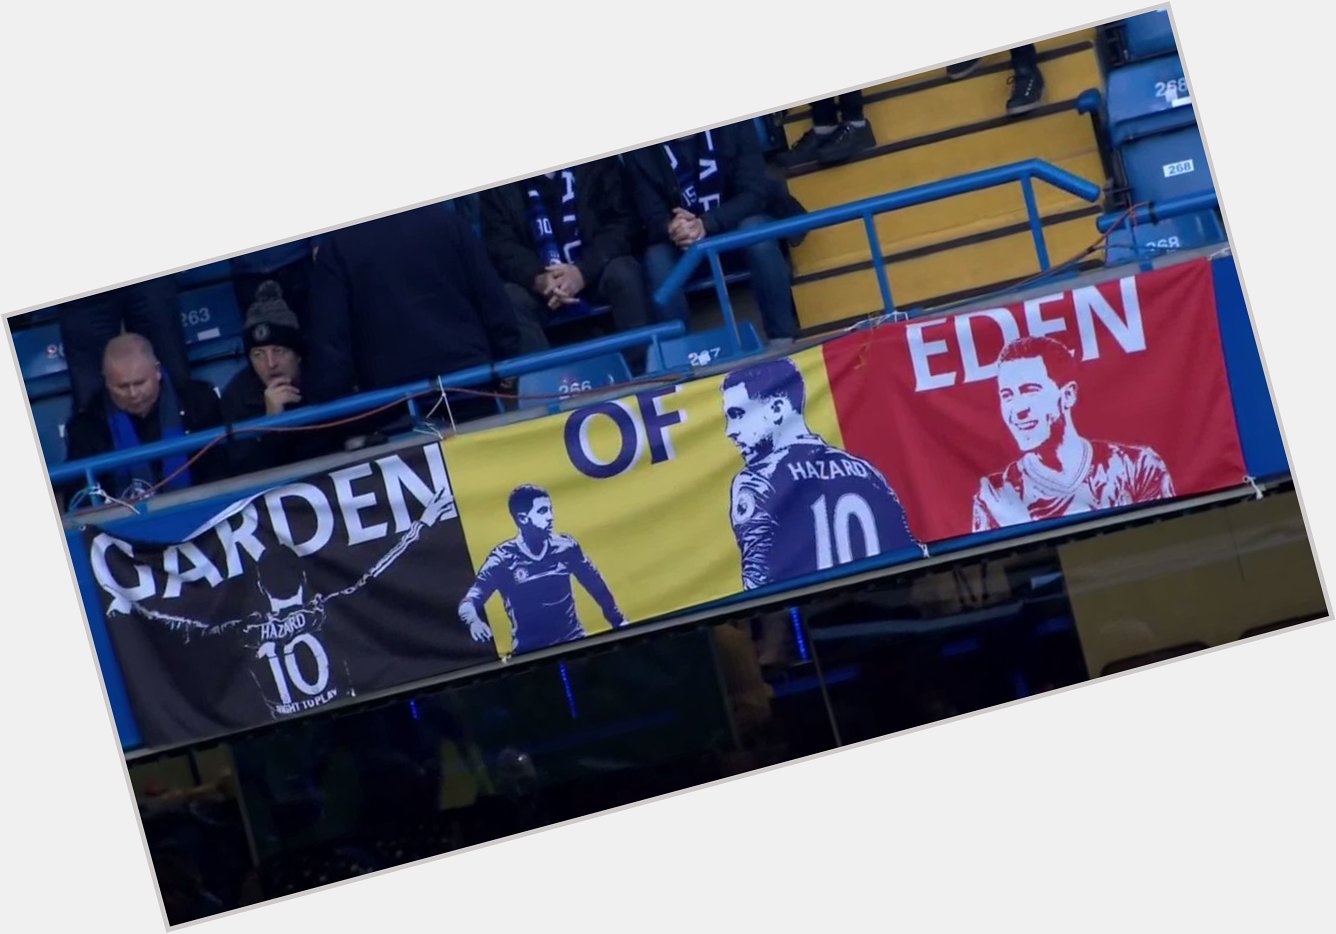 Happy Birthday to one of Chelsea\s GREATEST number 10s of all time...
Eden Hazard= Garden of Eden  